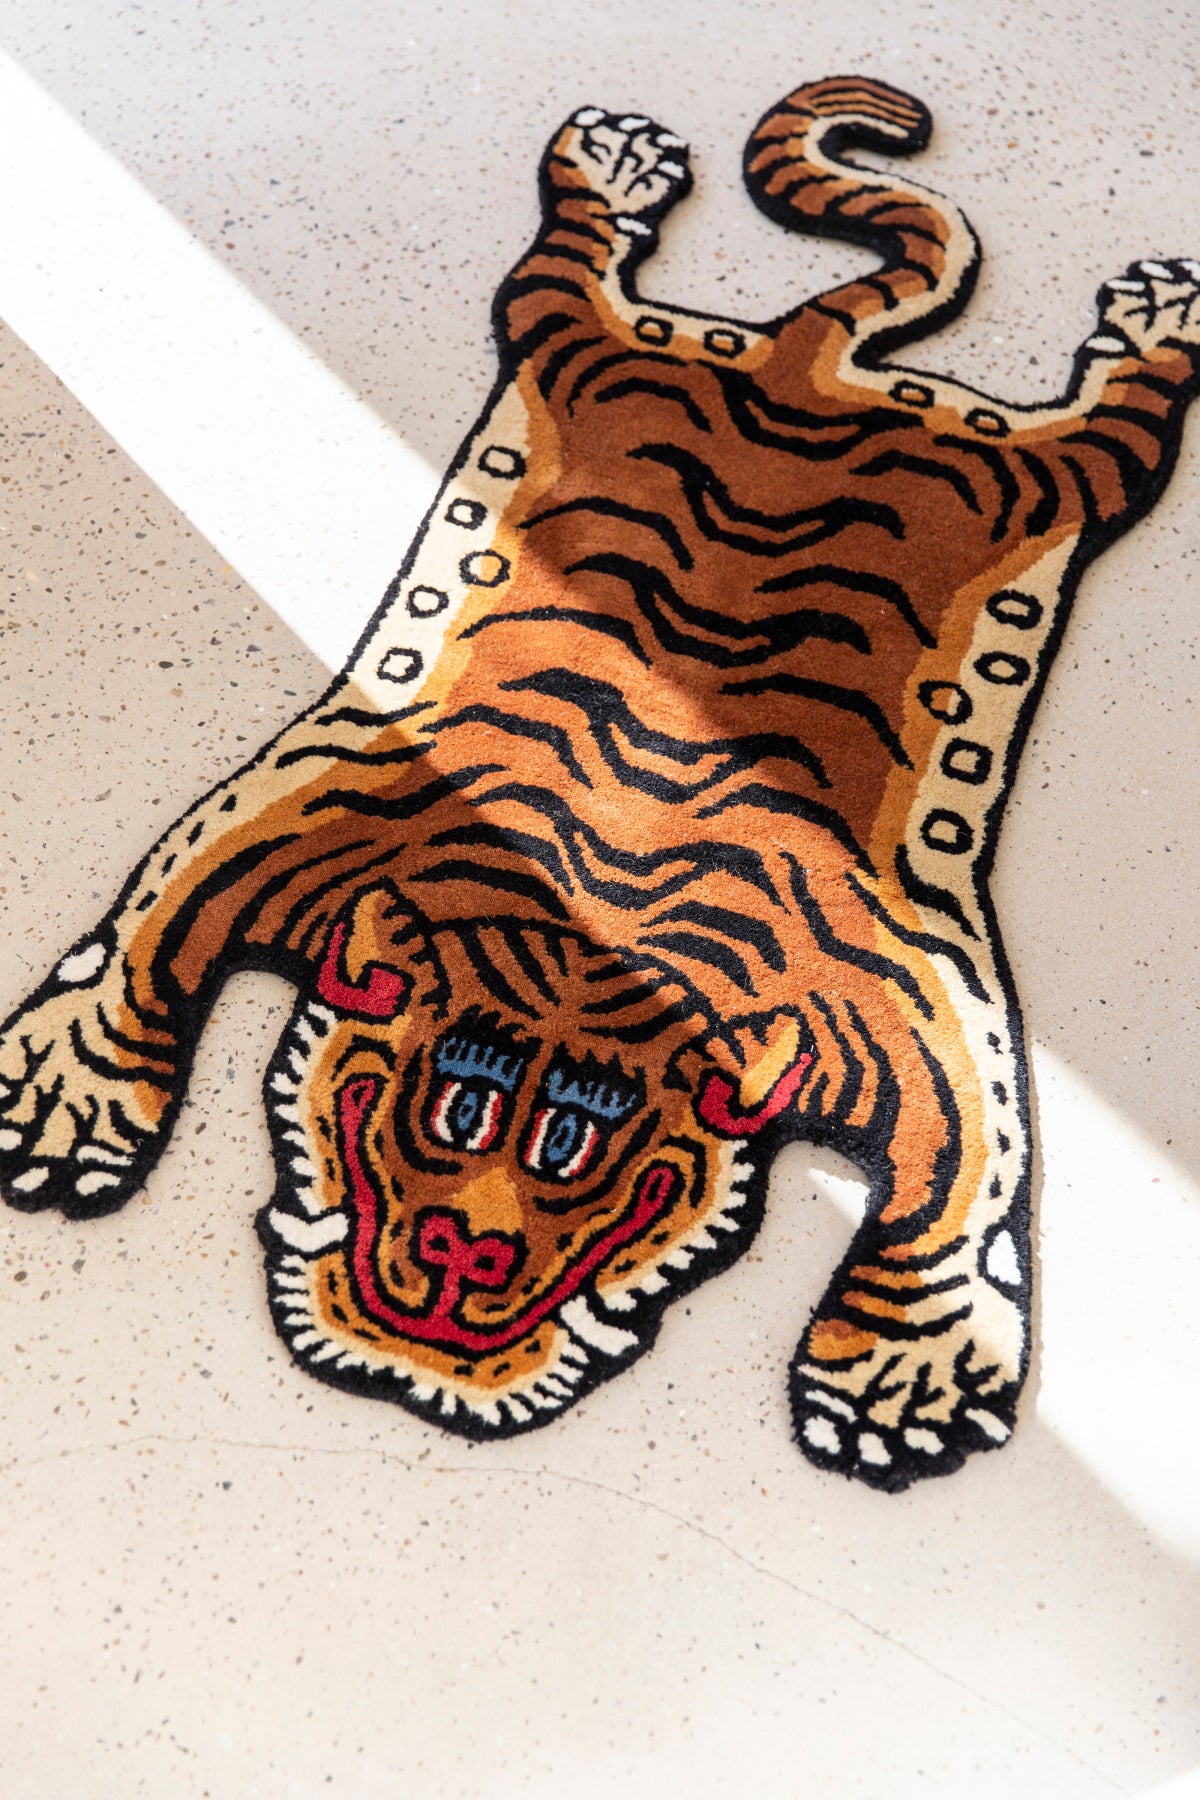 Tiger rug large (primary)